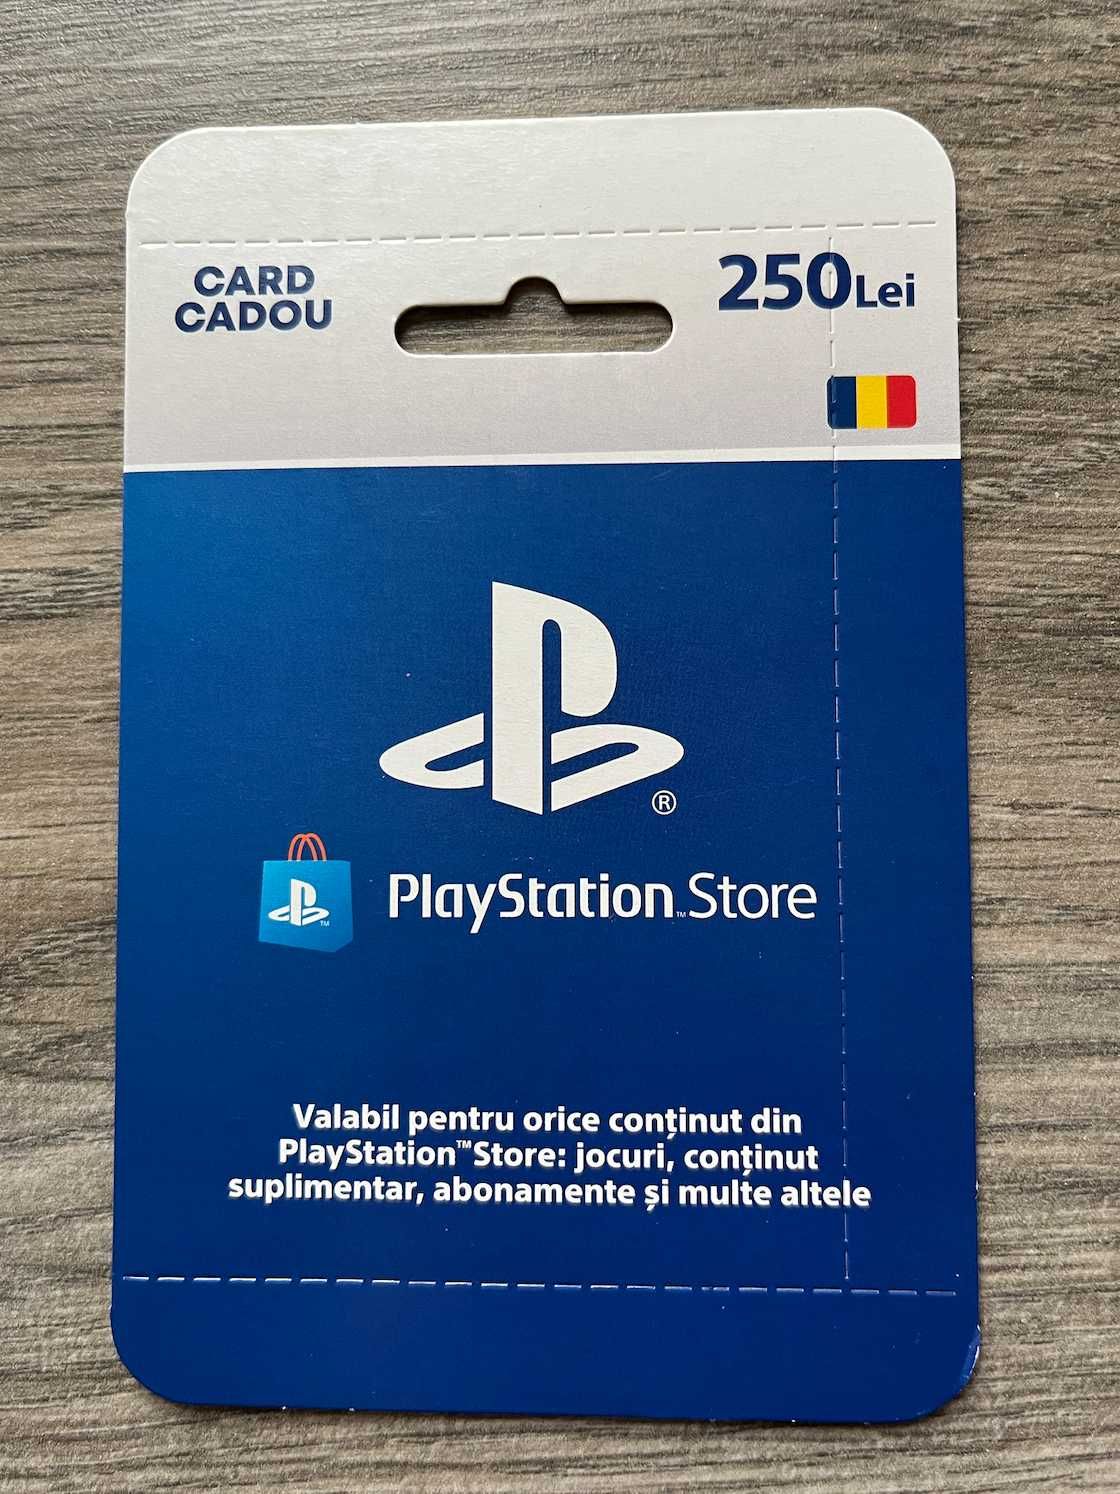 Card cadou voucher 250 lei PlayStation Store